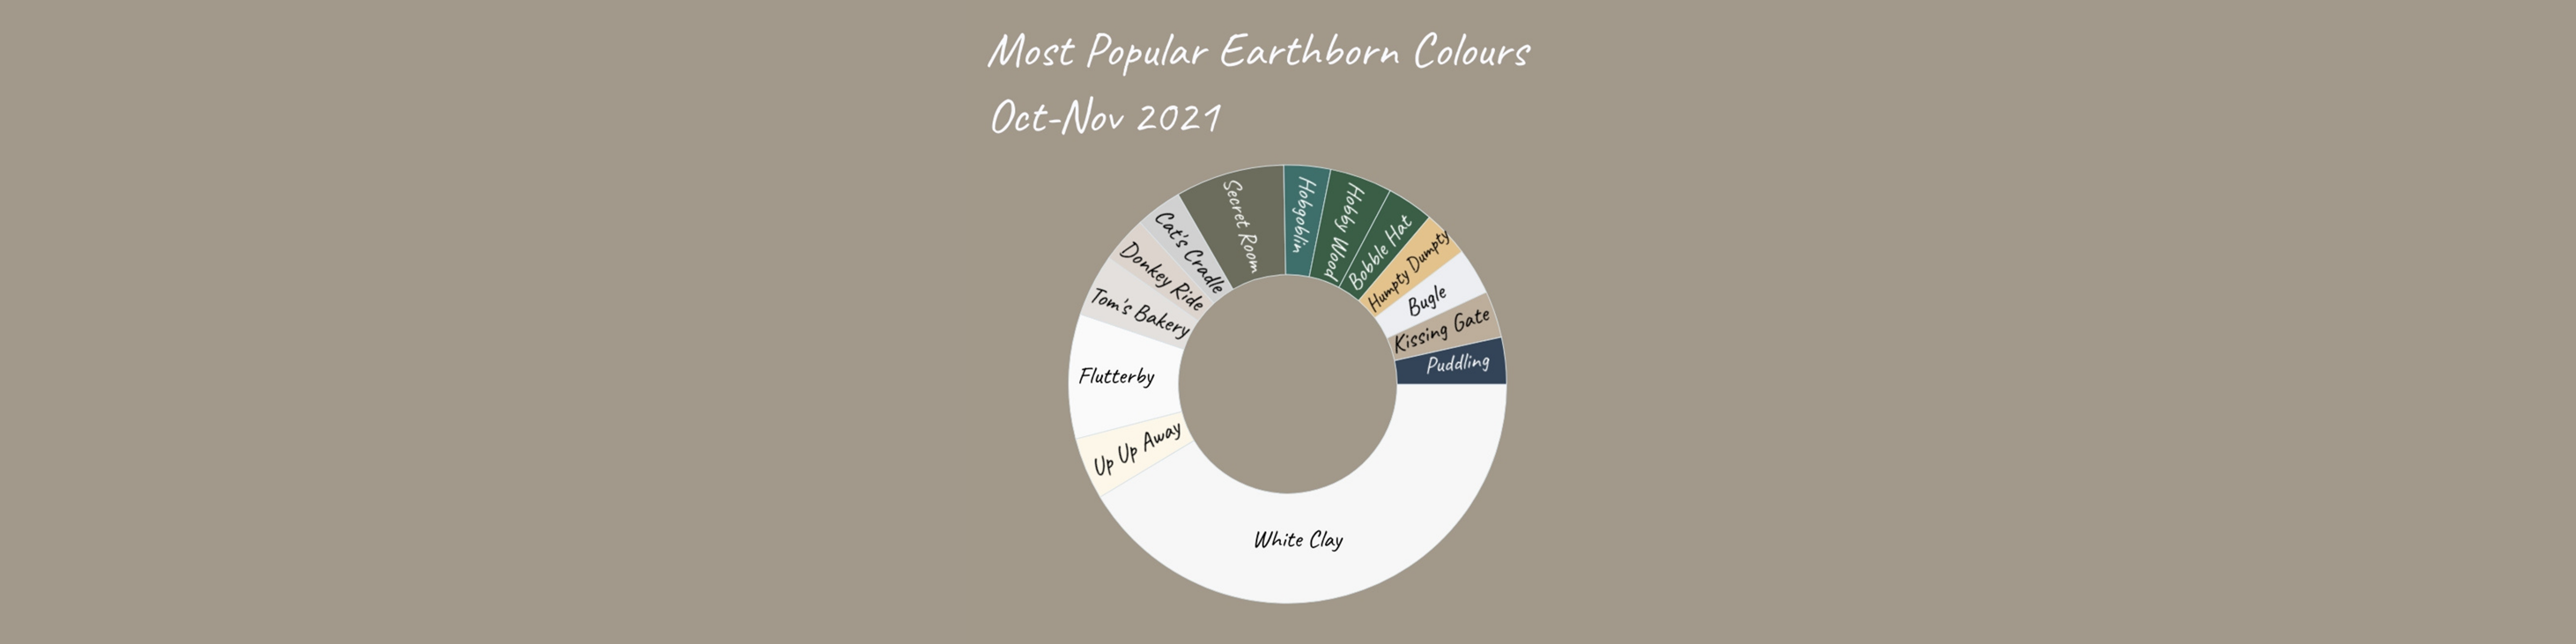 Popular Earthborn Colours